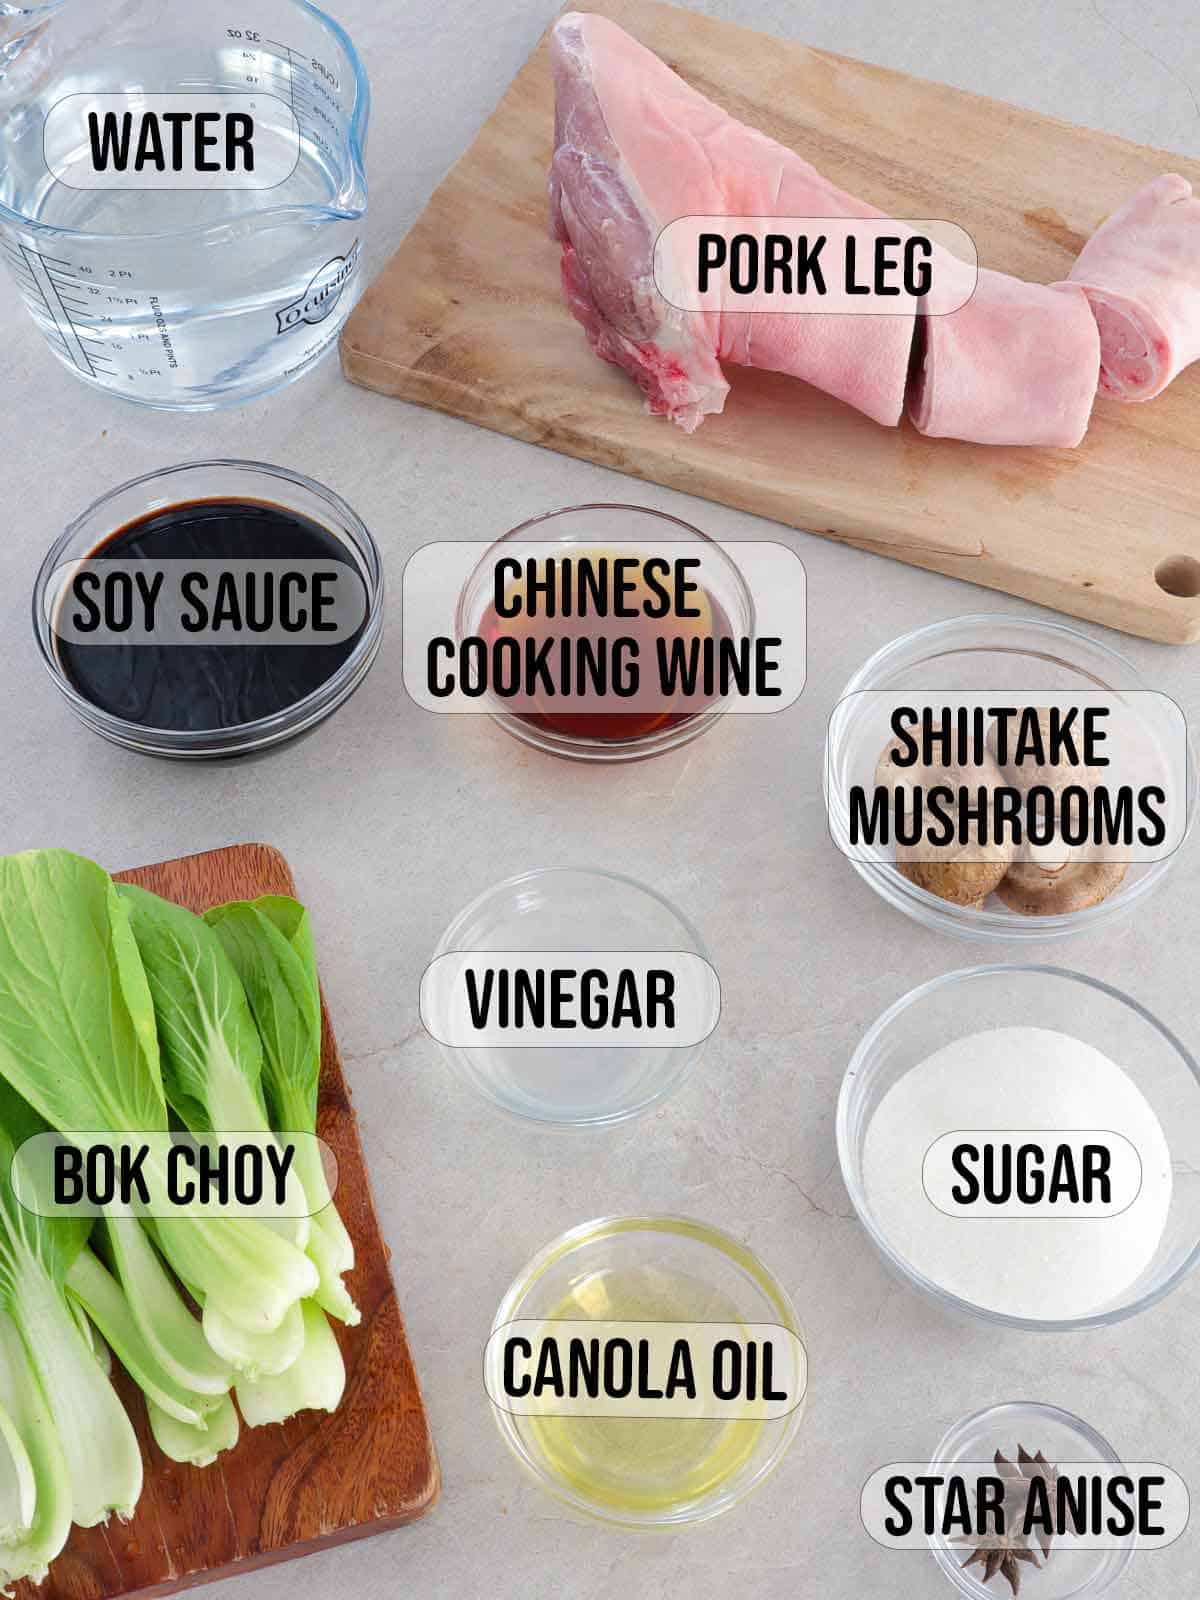 whole pork leg, soy sauce, Chinese cooking wine, sugar, shiitake mushrooms, bok choy, water, oil, star anise, vinegar in bowls.